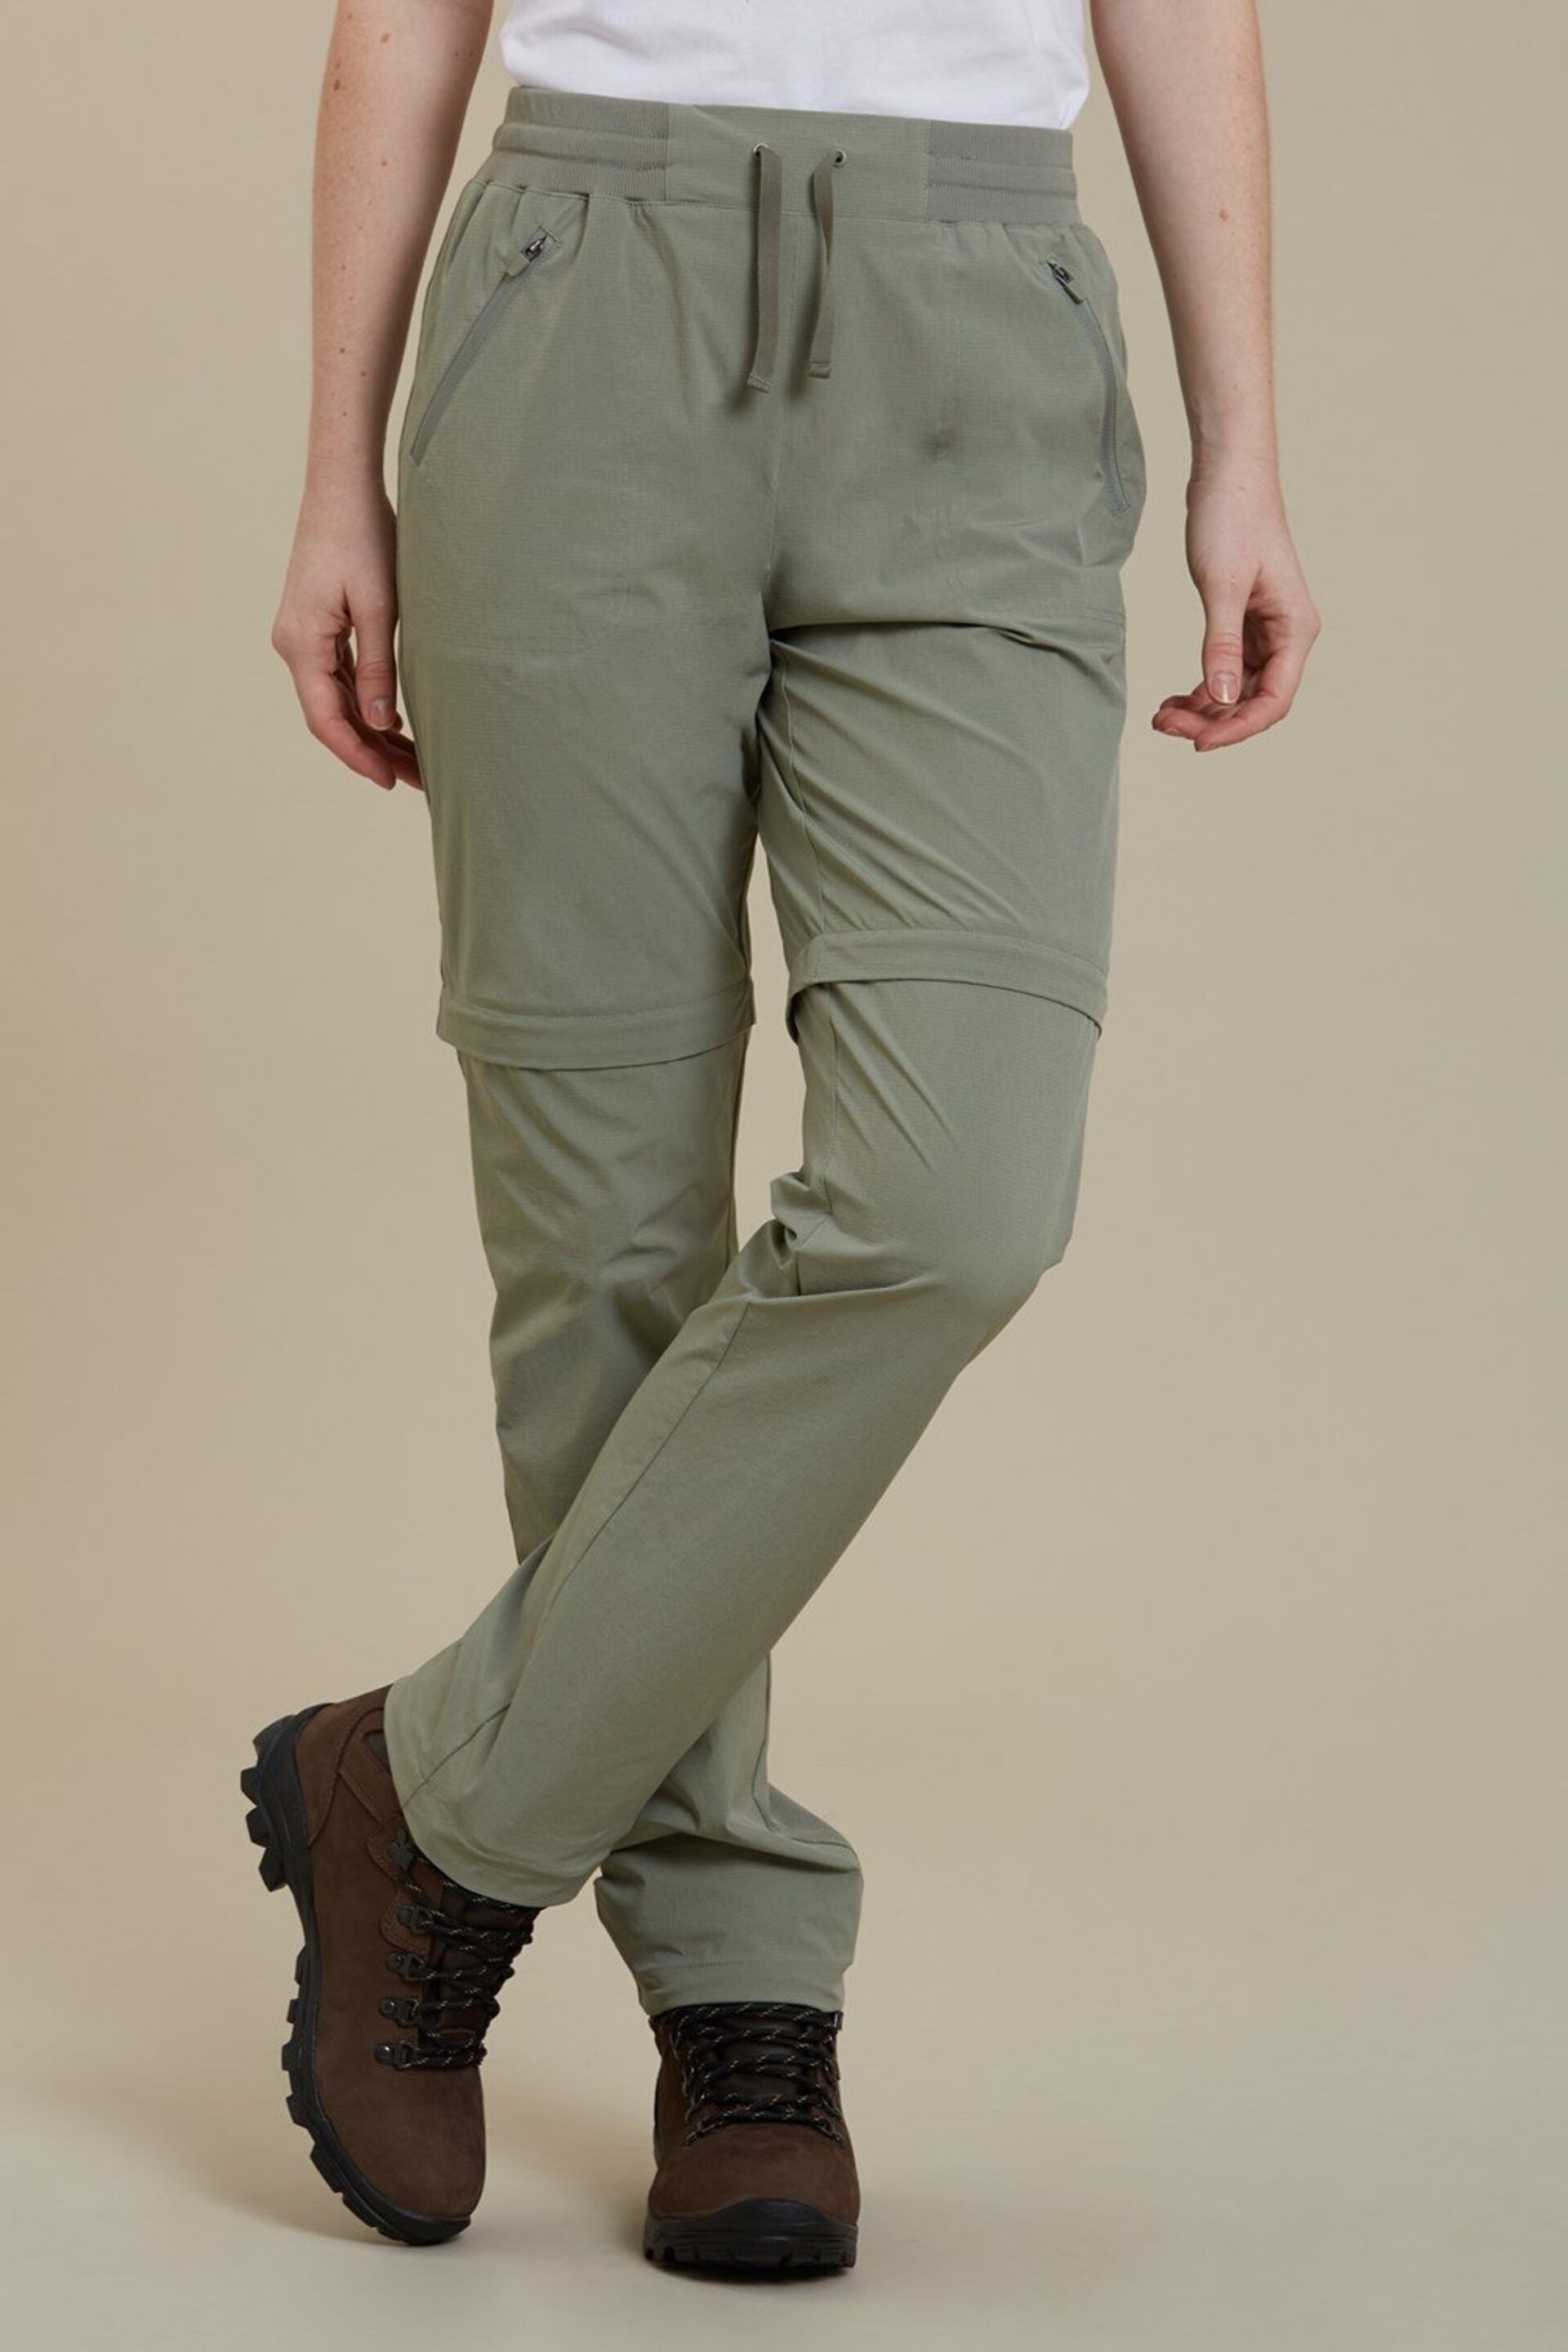 Mountain Warehouse Green Explorer Womens Zip-Off Convertible Walking Trousers - Image 1 of 4